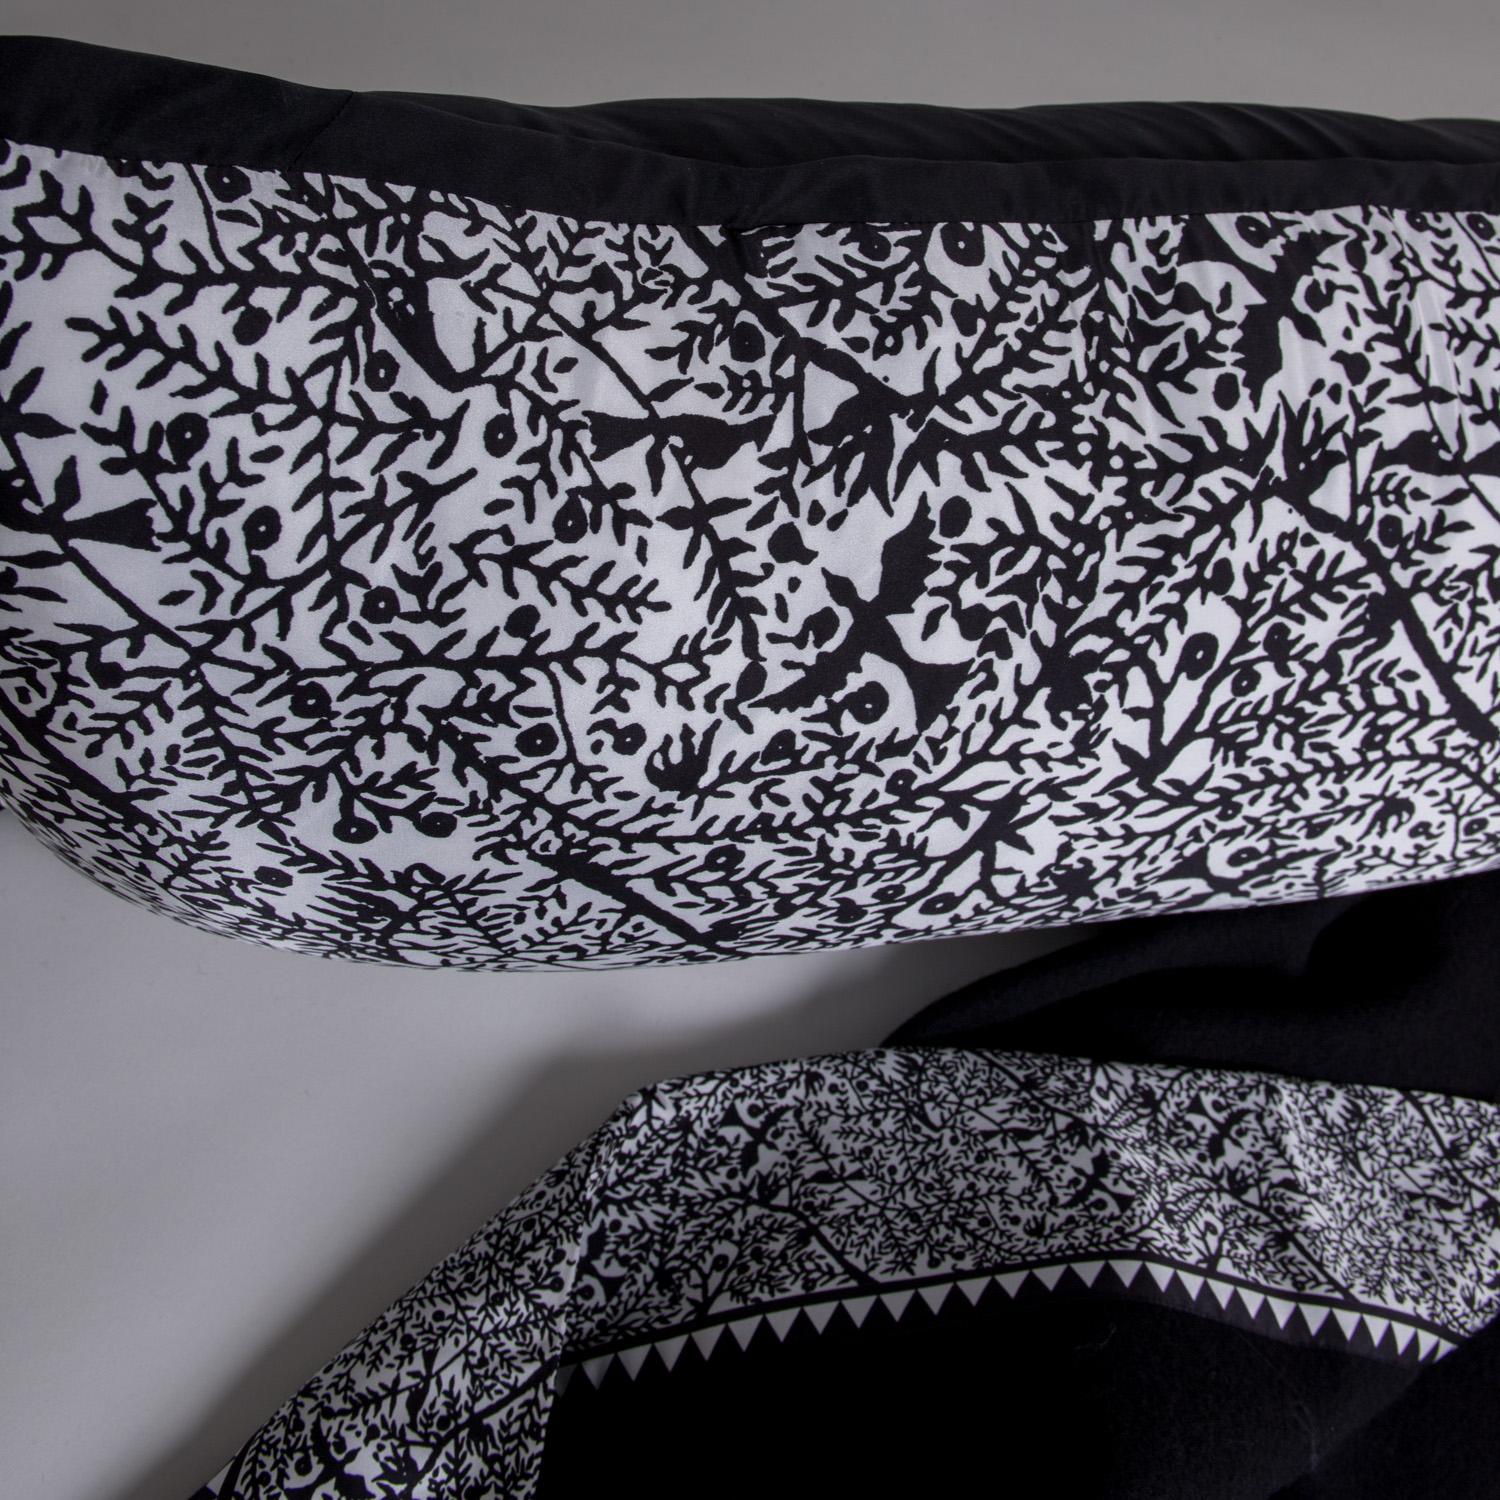 American Custom Designed Luxury 100% Merino Wool Emilie King Blanket with Body Pillow For Sale